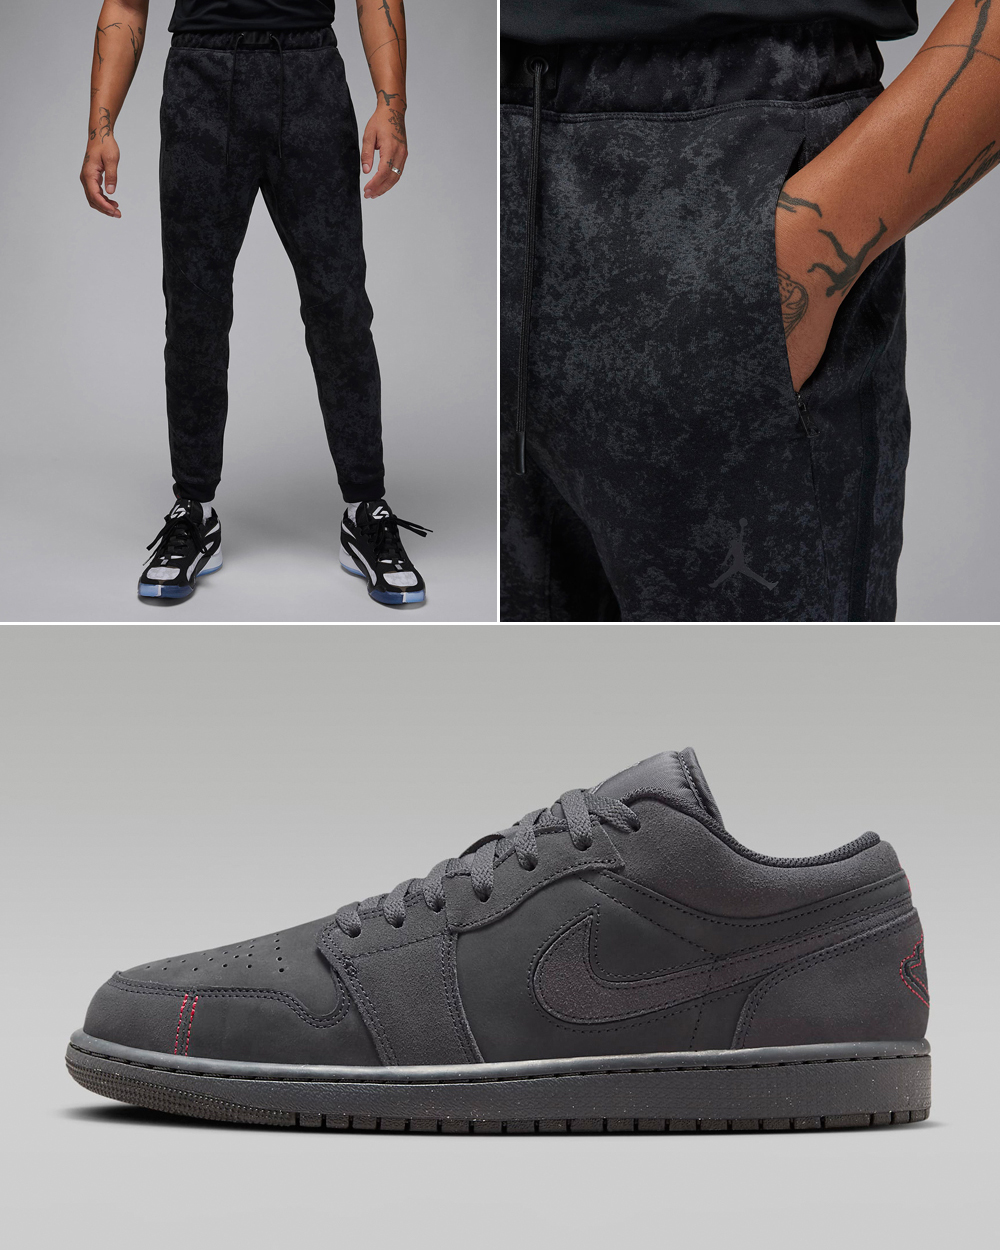 Air-Jordan-1-Low-Craft-Dark-Smoke-Grey-Pants-Outfit